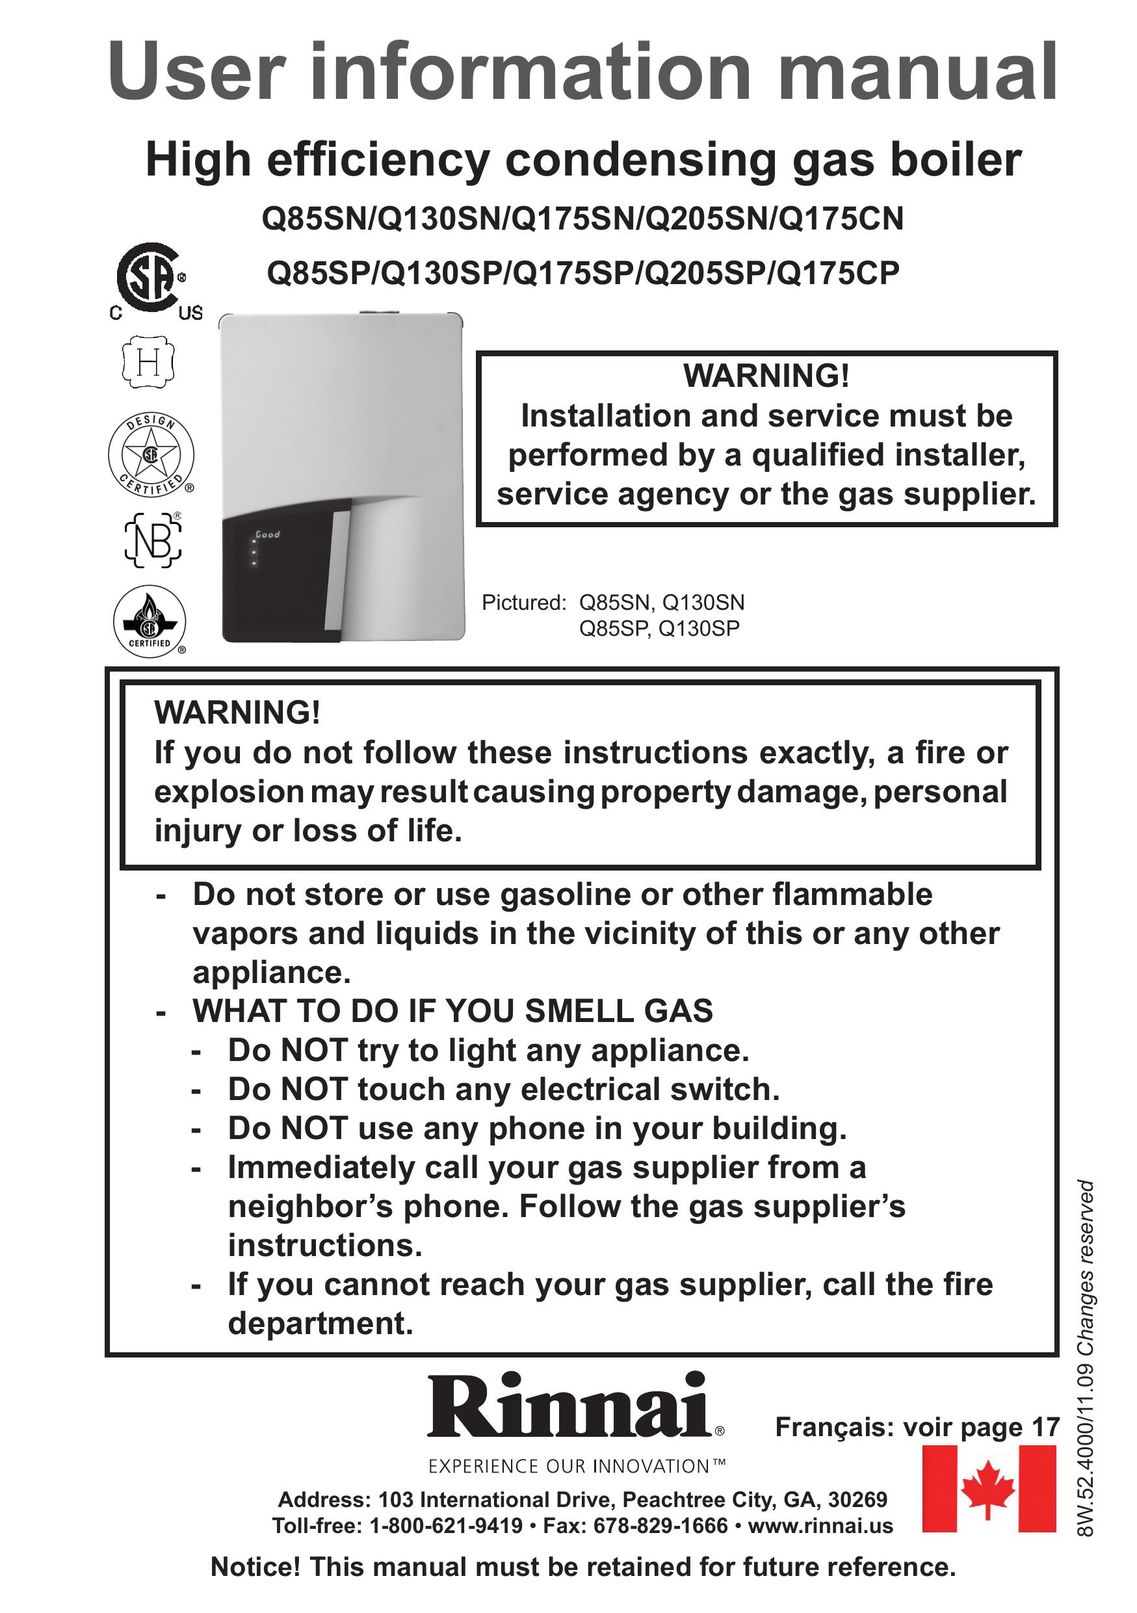 Rinnai Q175SN Boiler User Manual